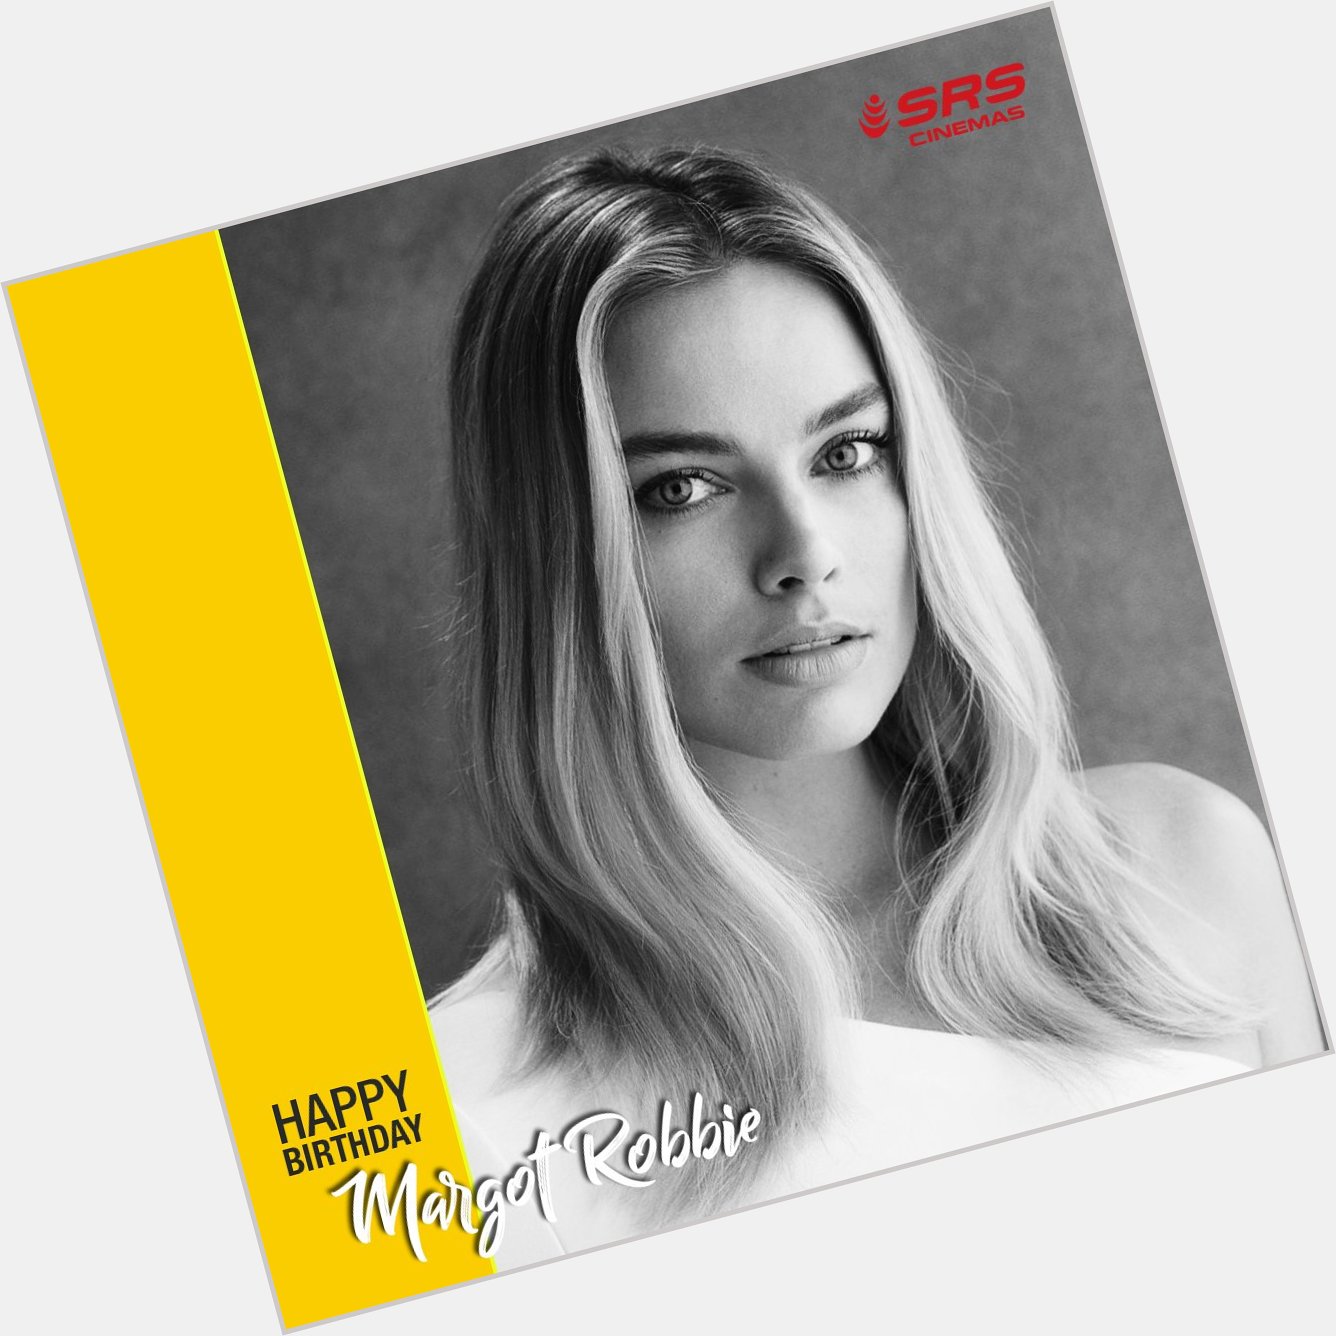 Wishing the stunning Margot Robbie a very happy birthday. 